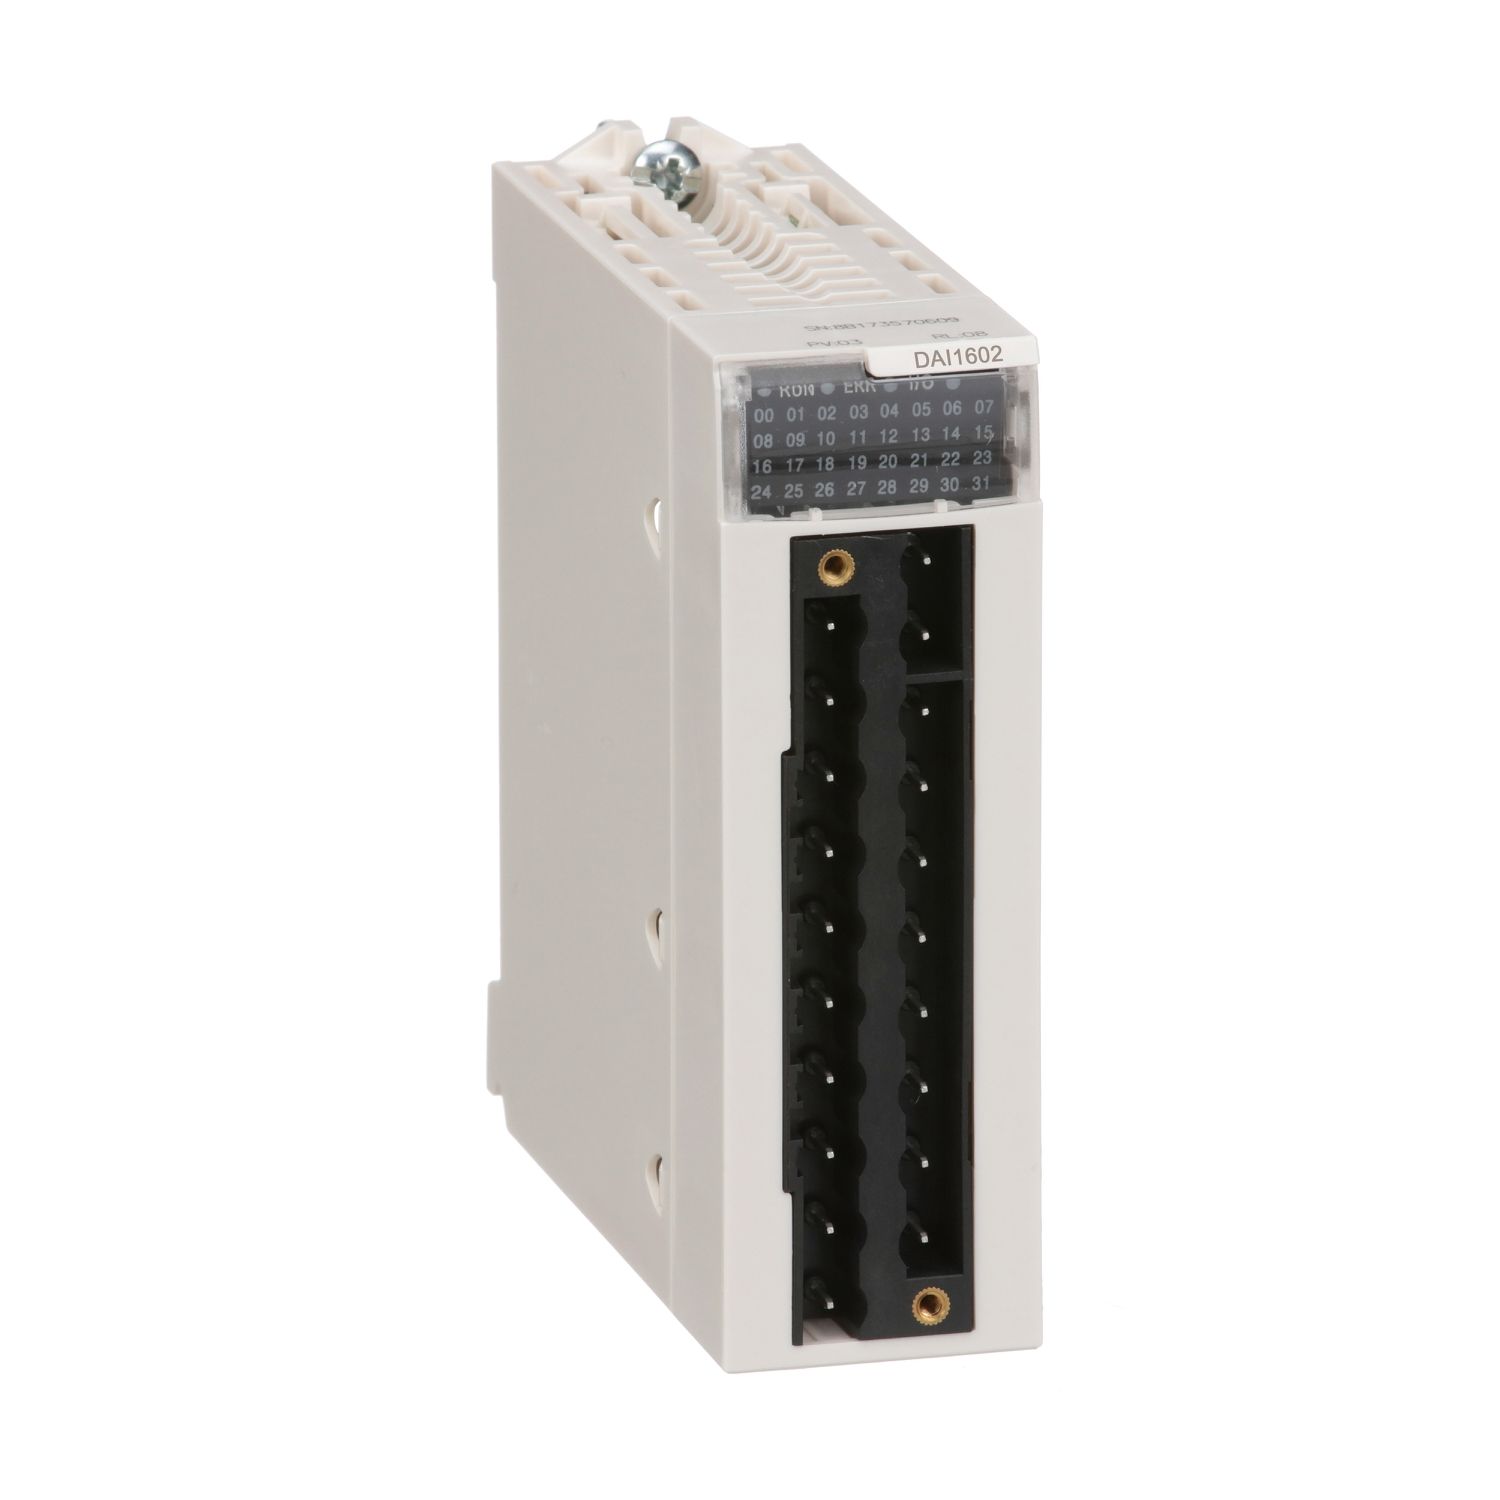 HKXYTECH SCHNEIDER discrete input module BMXDAI1602 IN STOCK